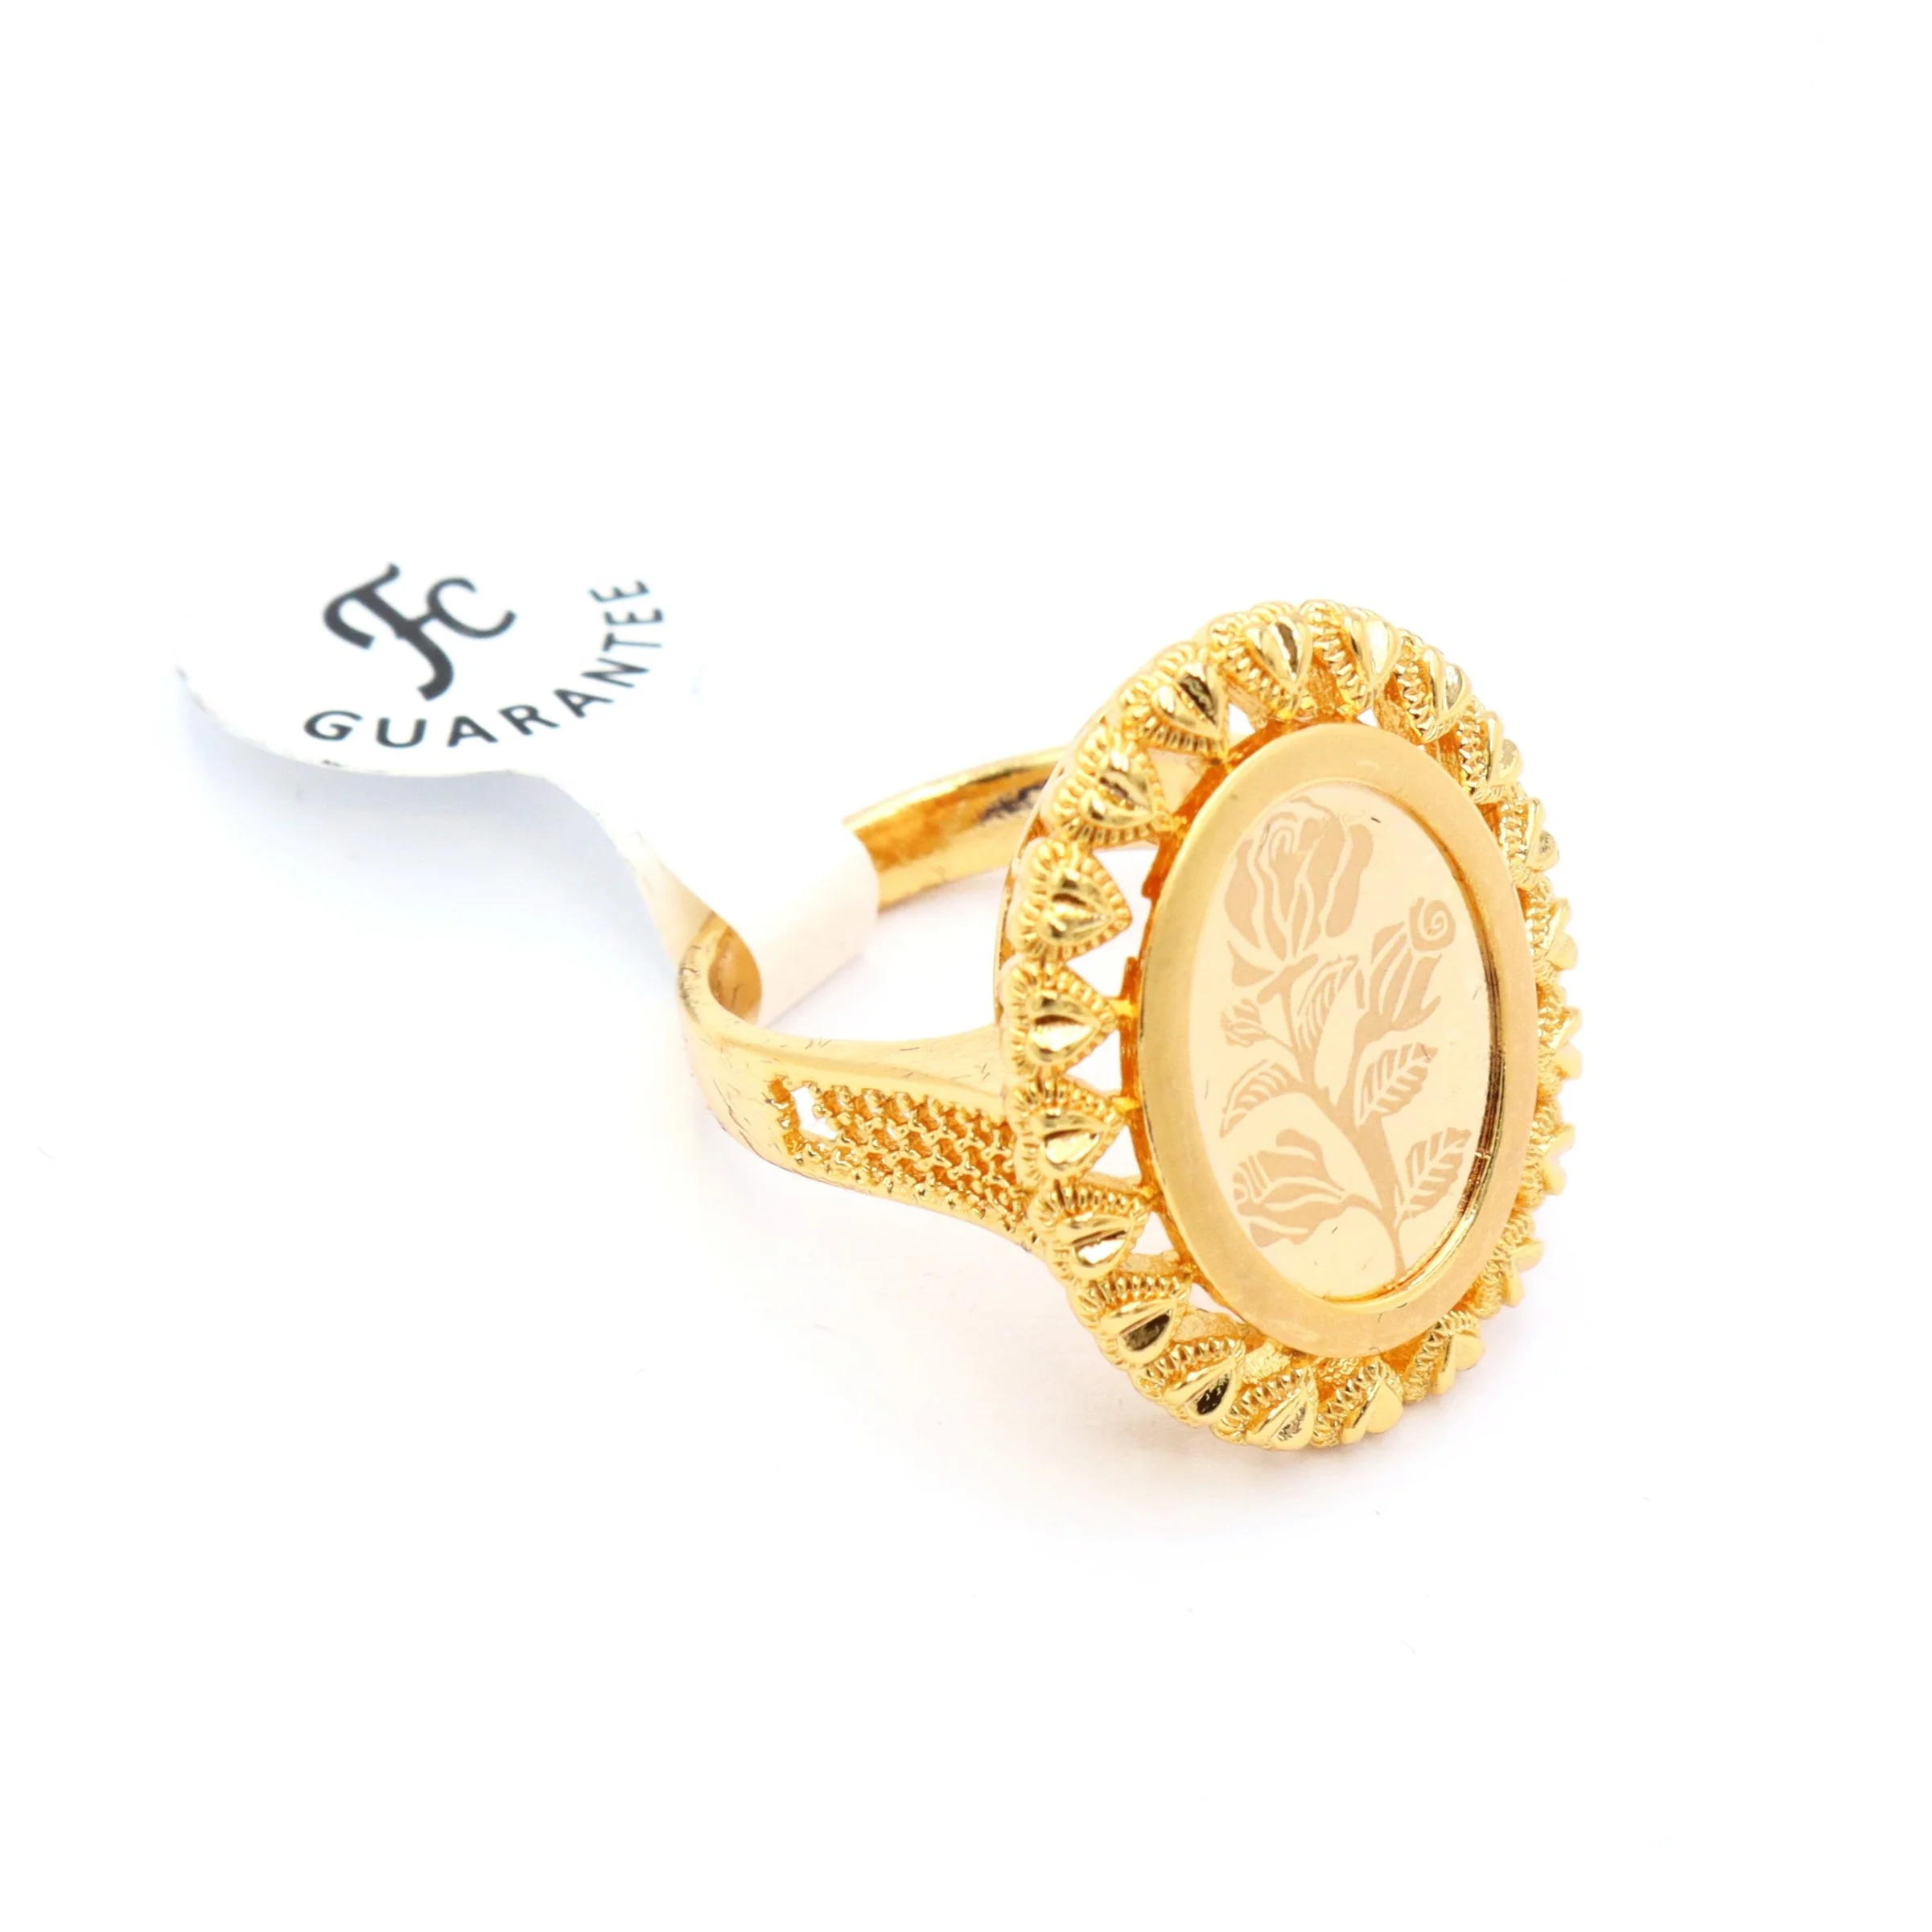 14k Gold Mens Diamond Coin Ring With A 22k U.S. $1.00 Type 3 | Sarraf.com